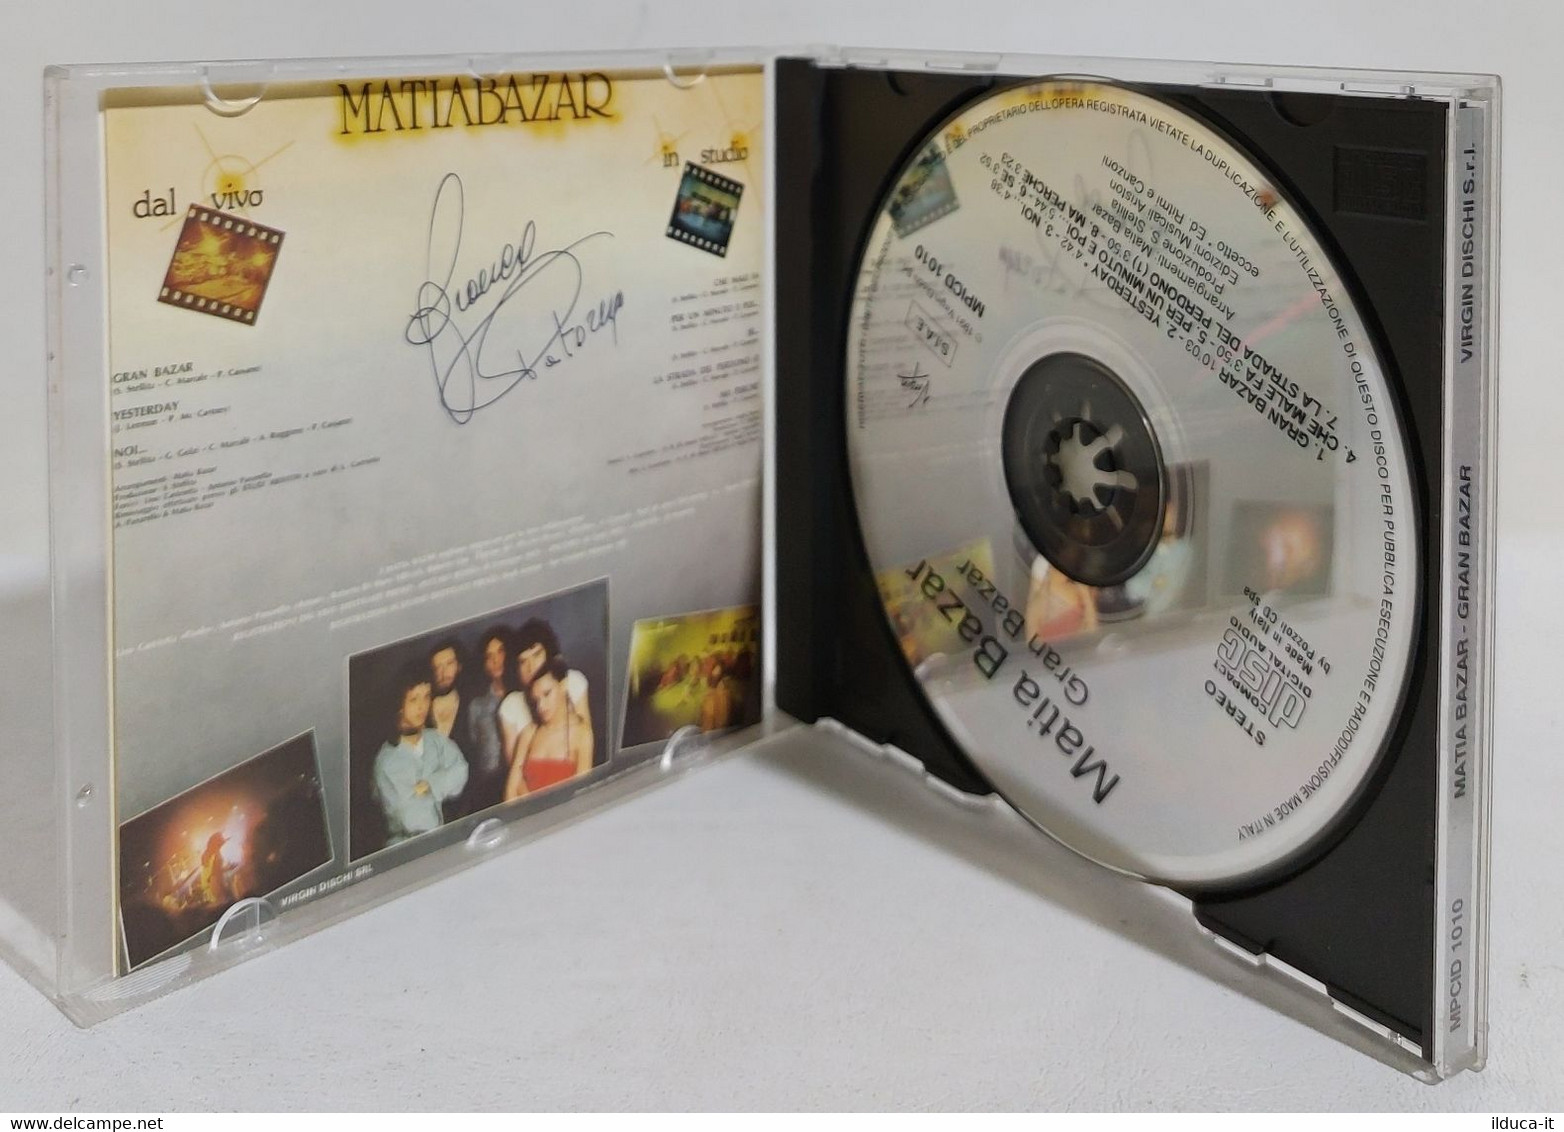 I107650 CD - Matia Bazar - Granbazar - Virgin 1991 - Other - Italian Music